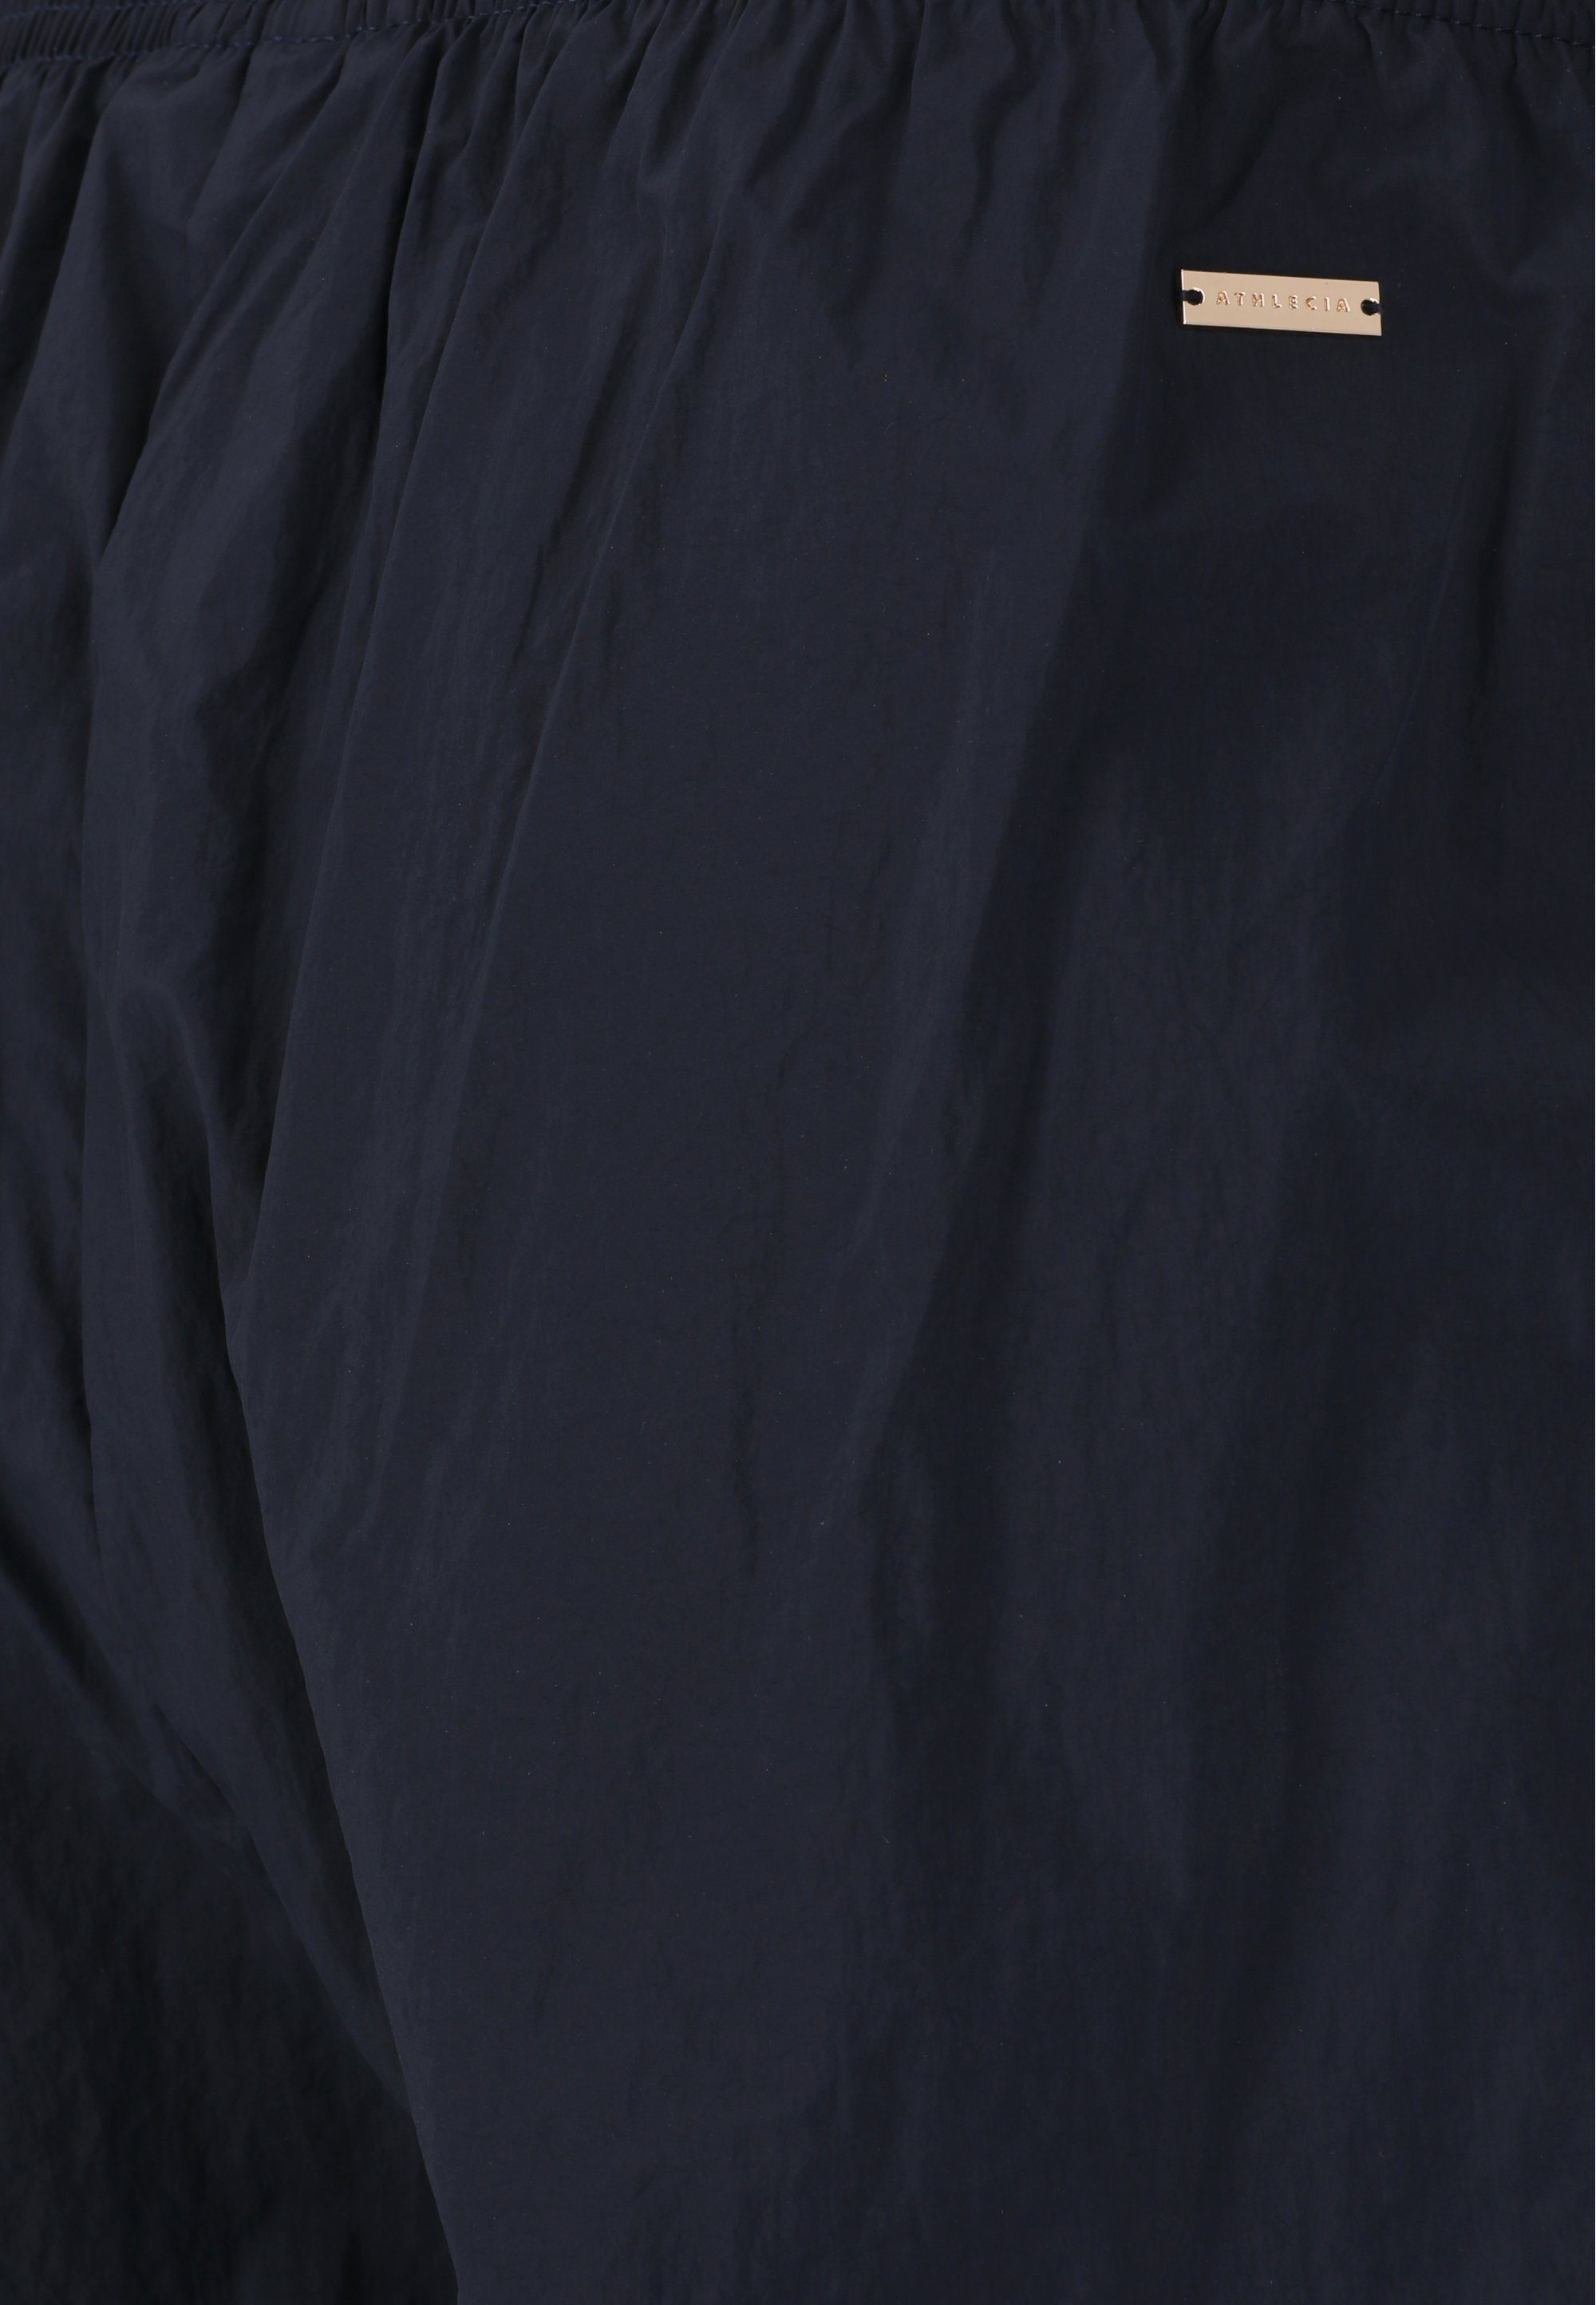 ATHLECIA Sporthose Tharbia mit justierbarem dunkelblau Bund